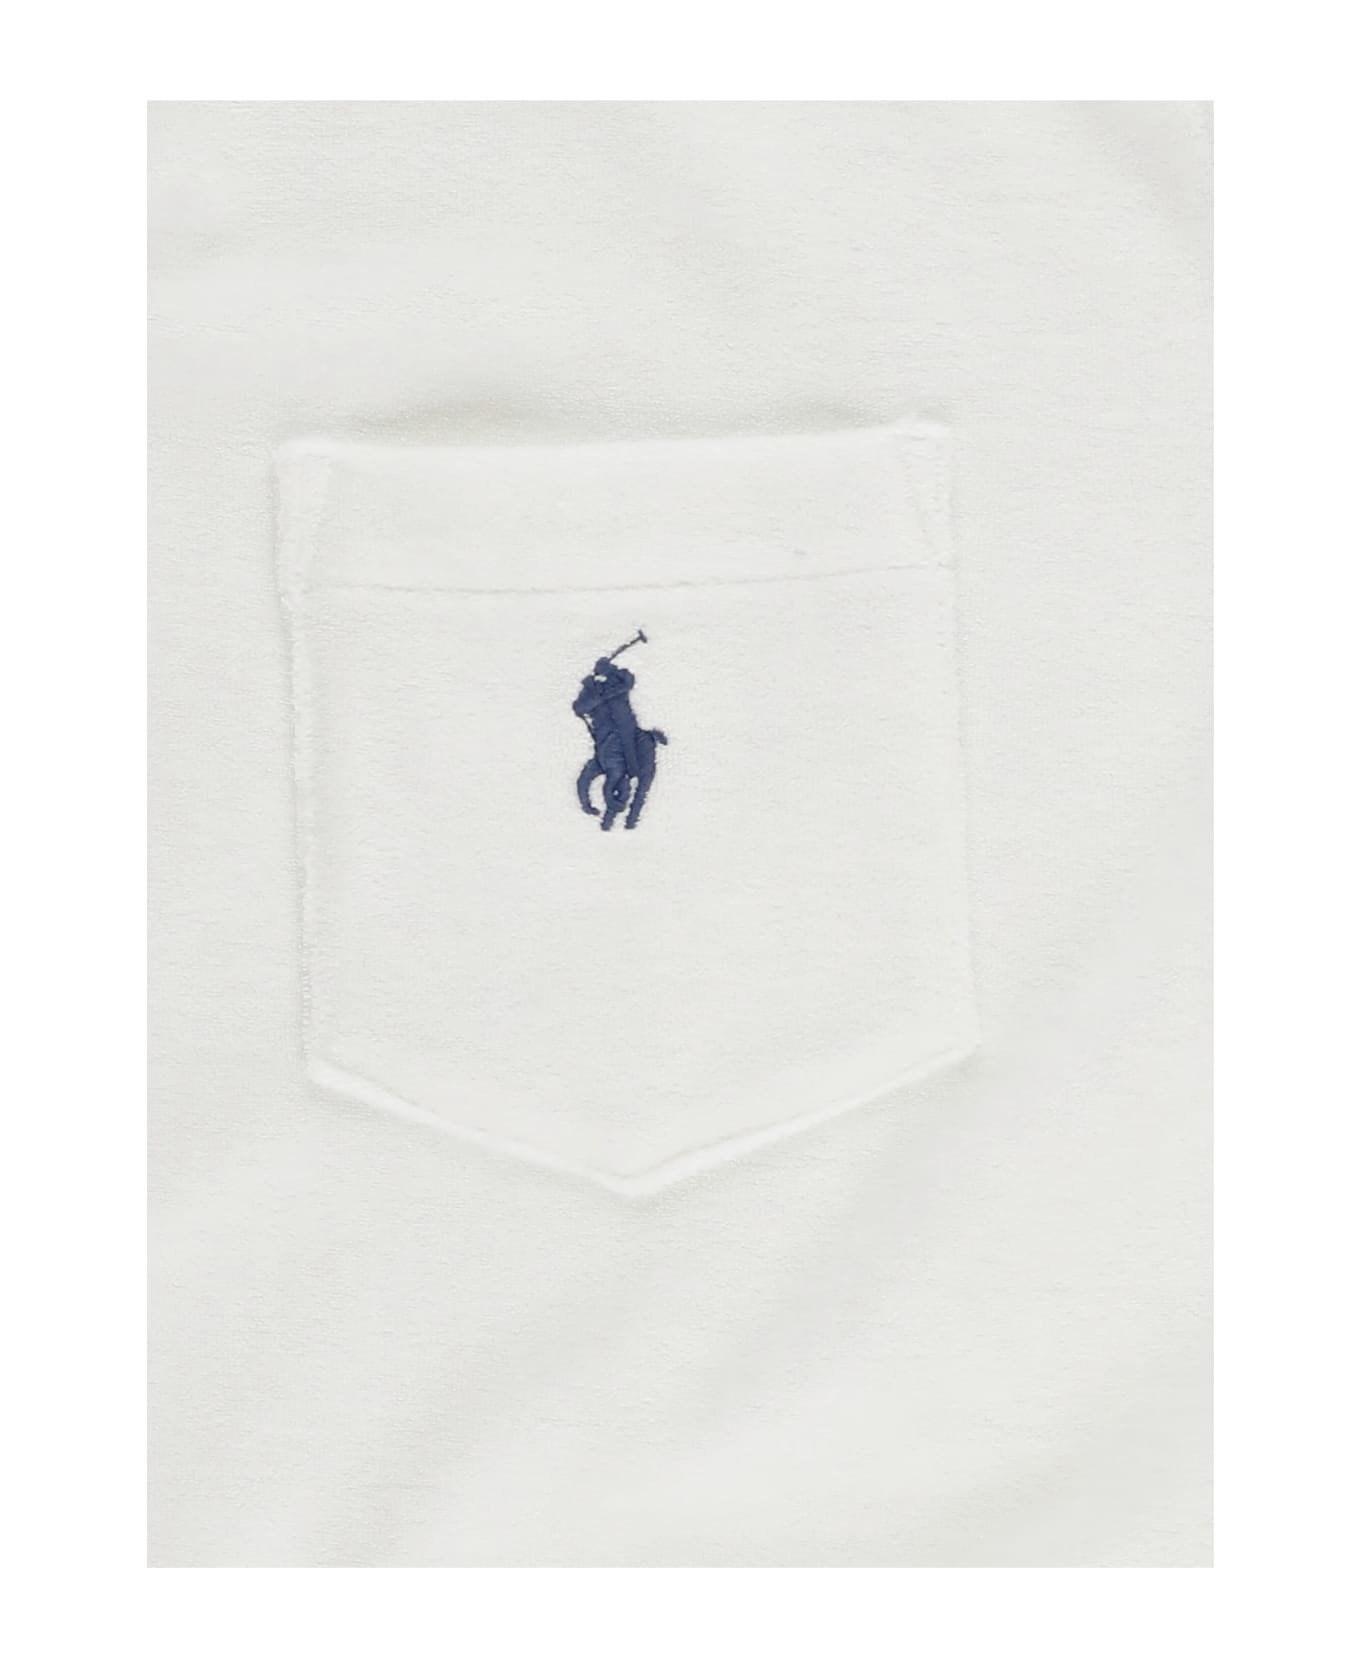 Ralph Lauren Pony Polo Shirt - White